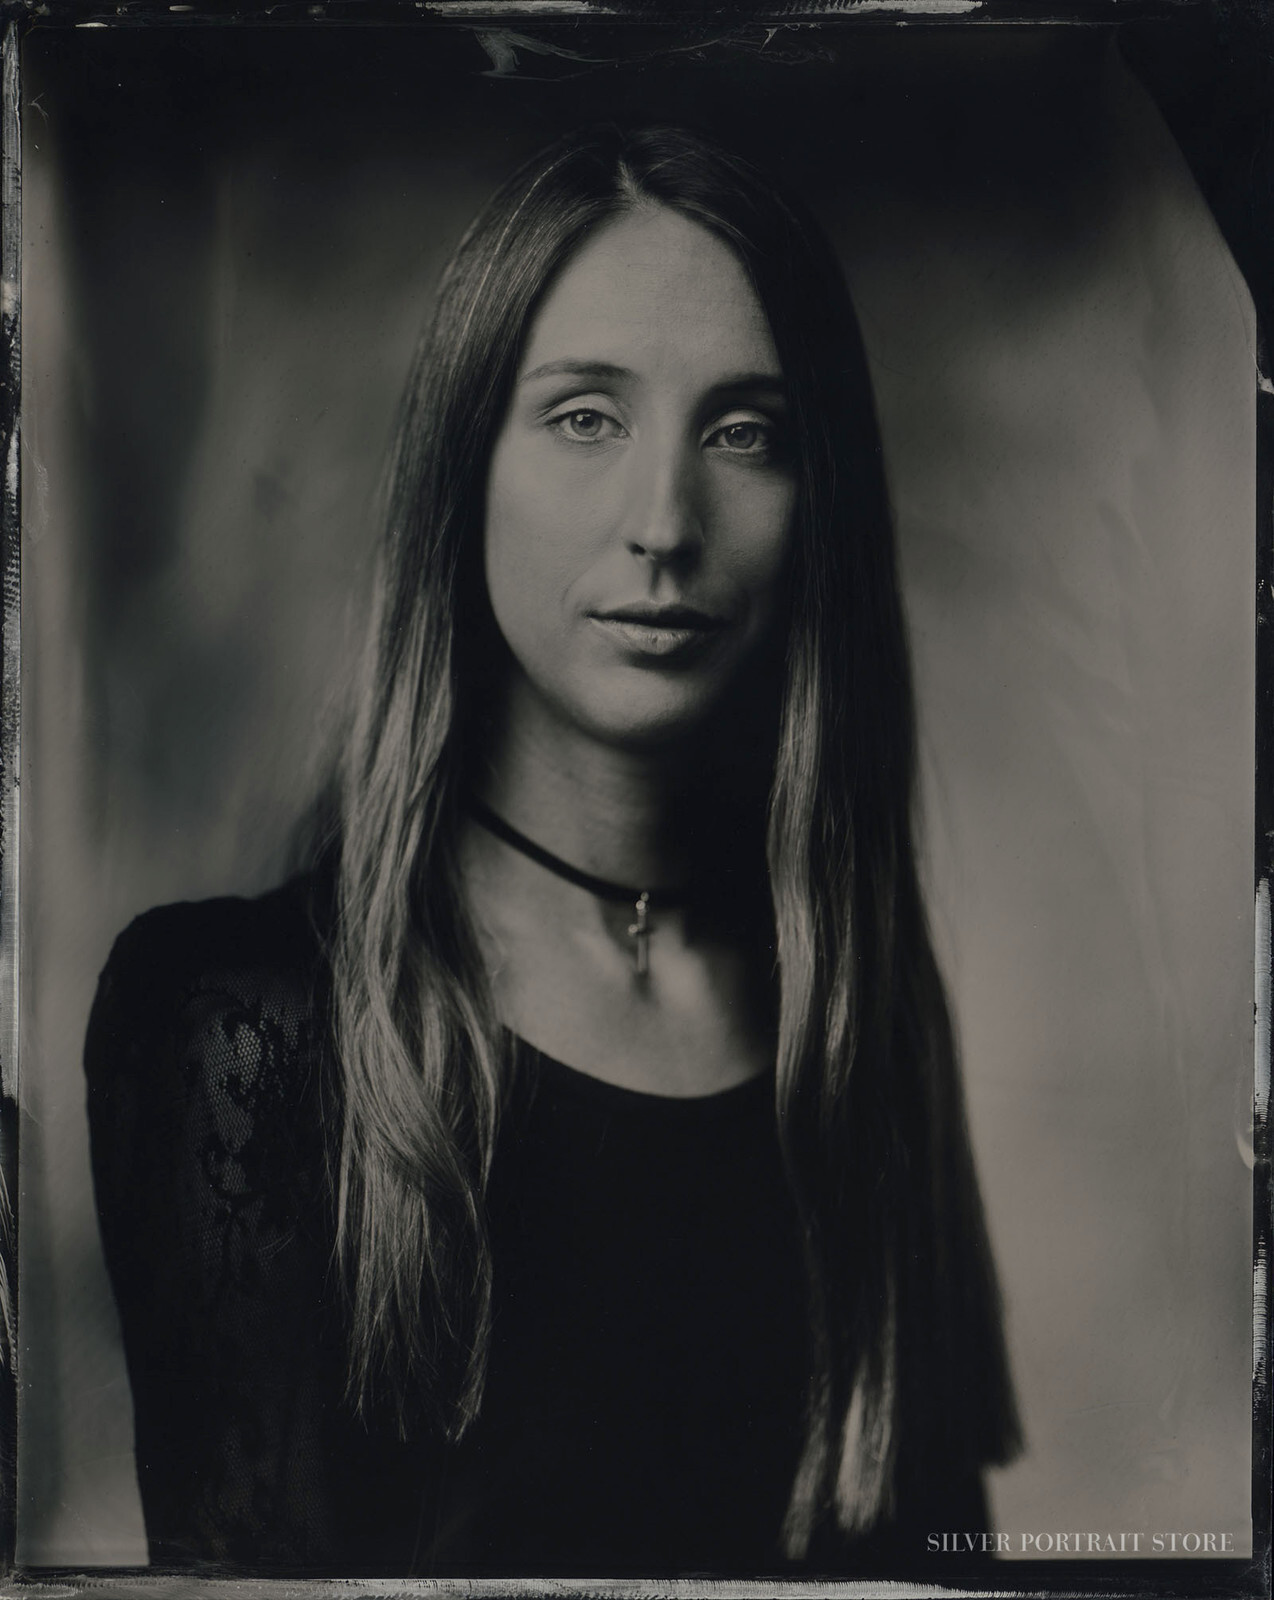 Vera-Silver Portrait Store-Wet plate collodion-Tintype 10 x 12 cm.